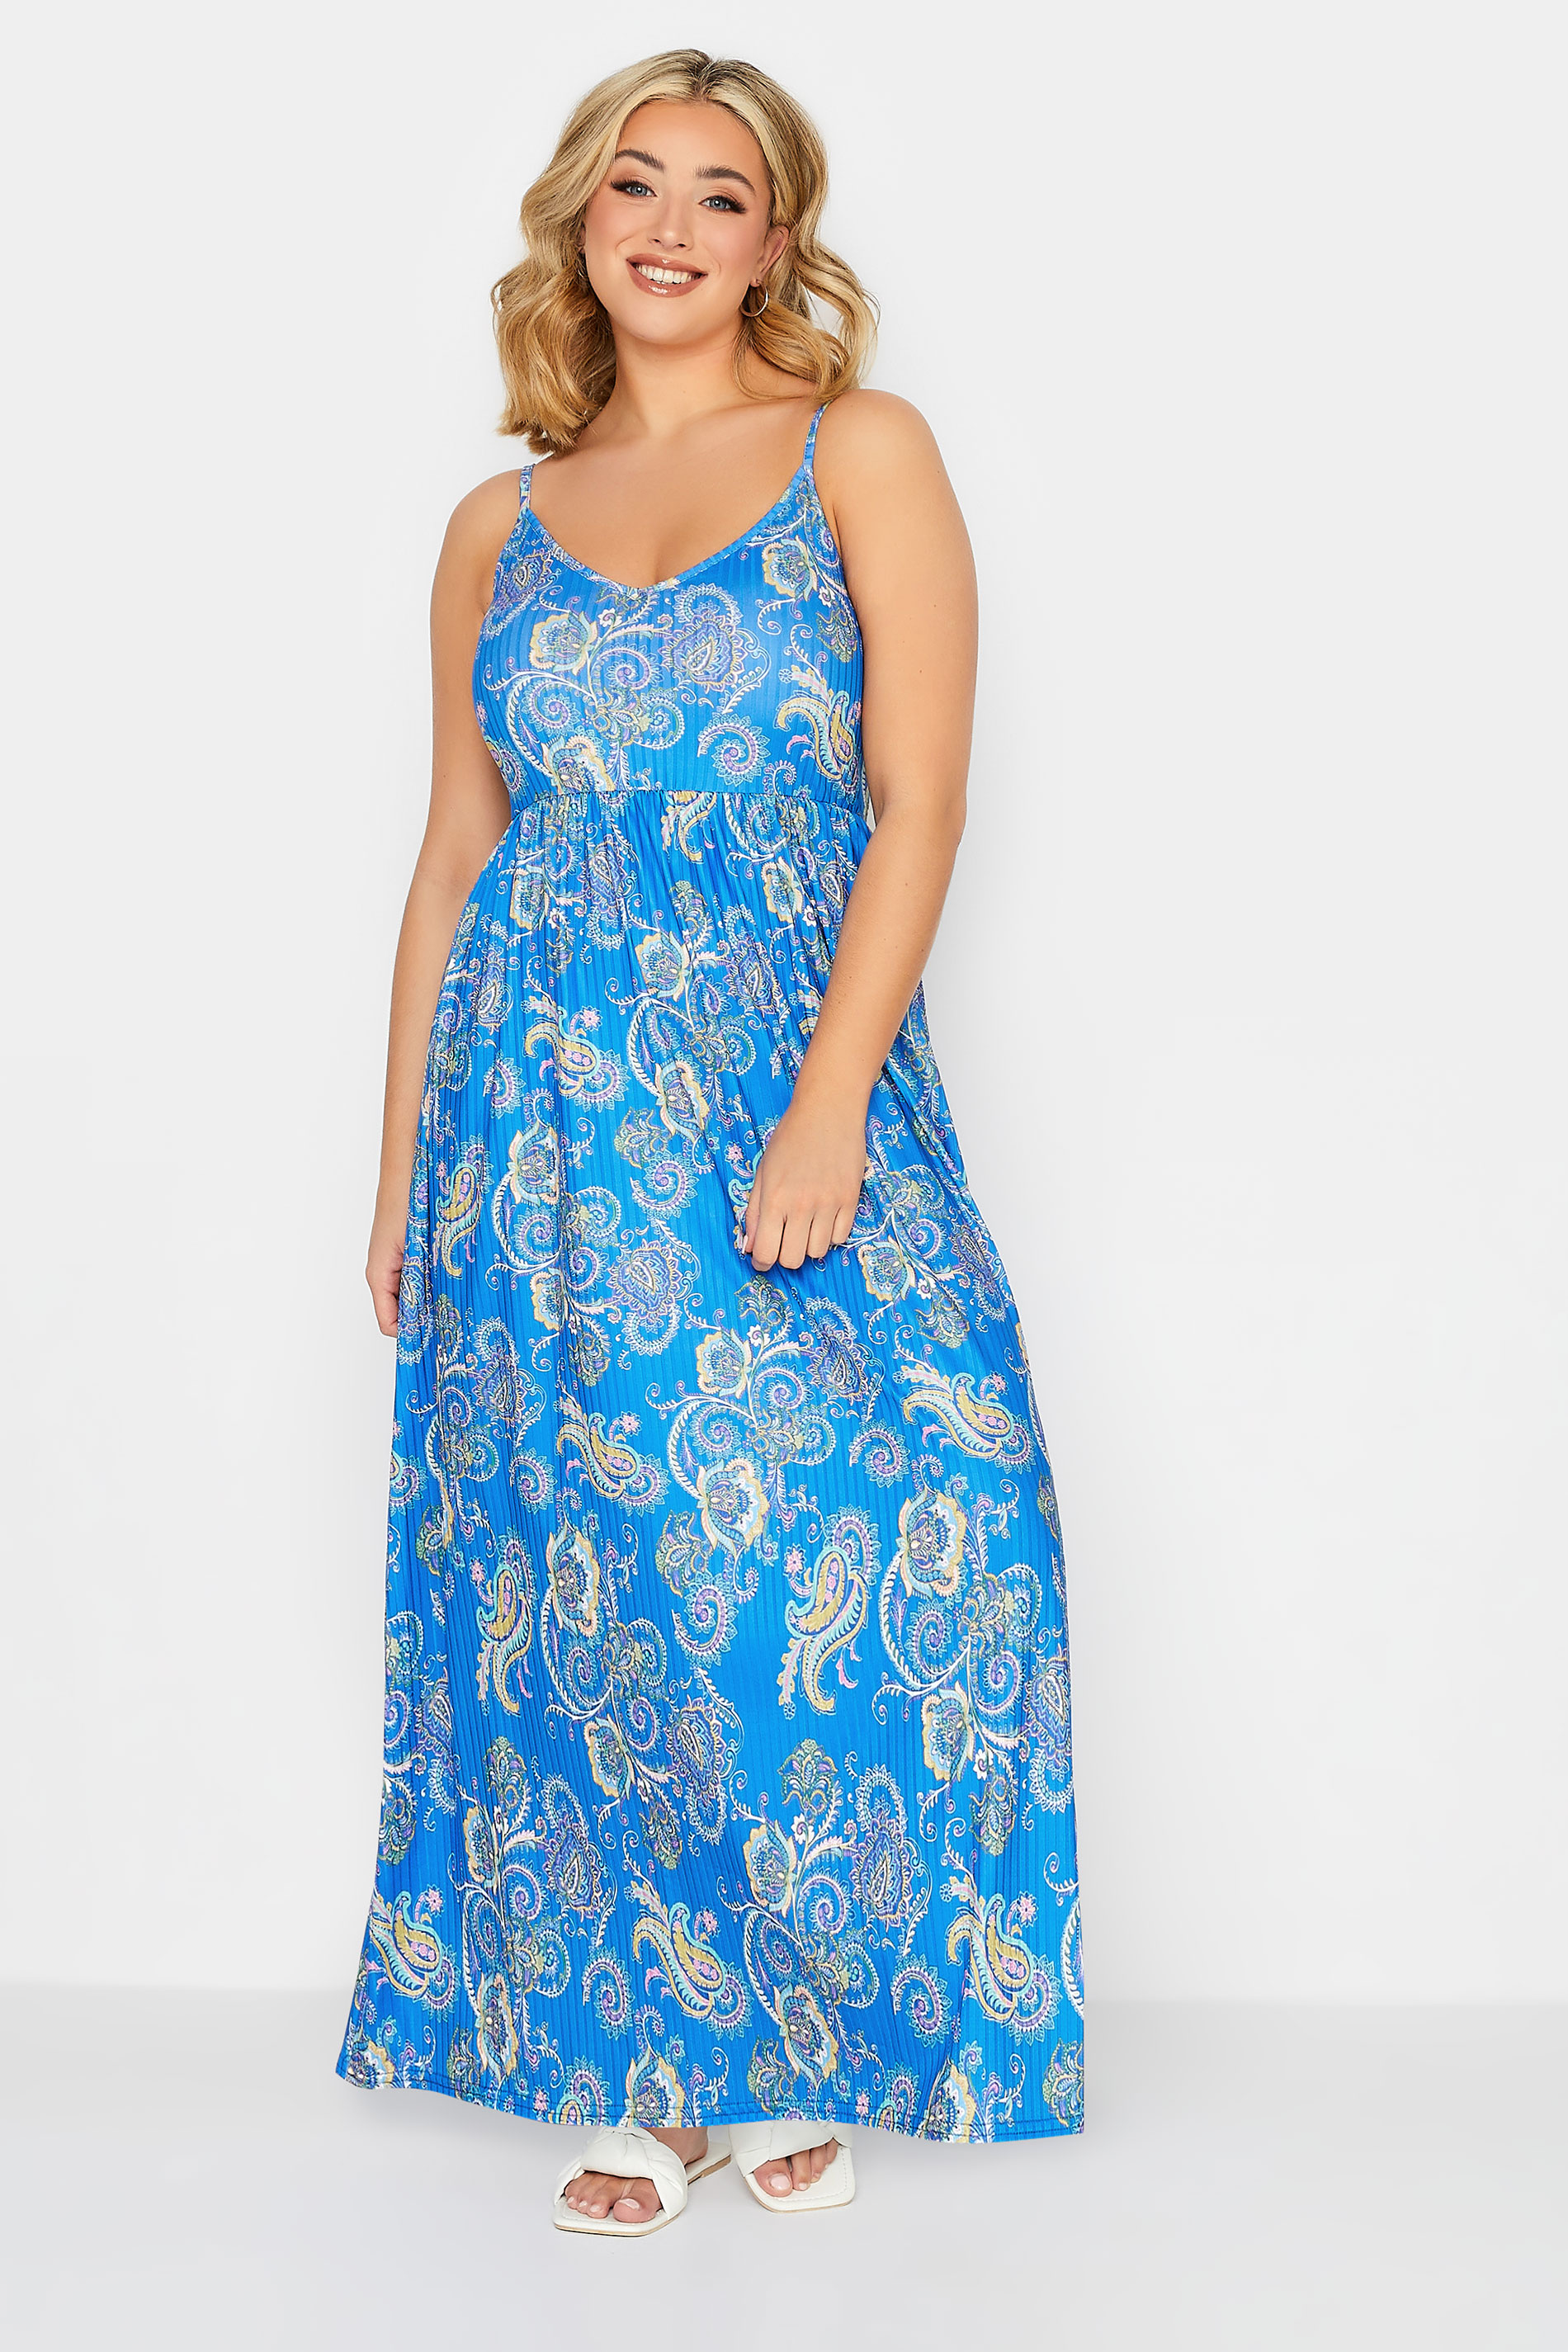 YOURS PETITE Plus Size Curve Blue Paisley Maxi Dress | Yours Clothing  2